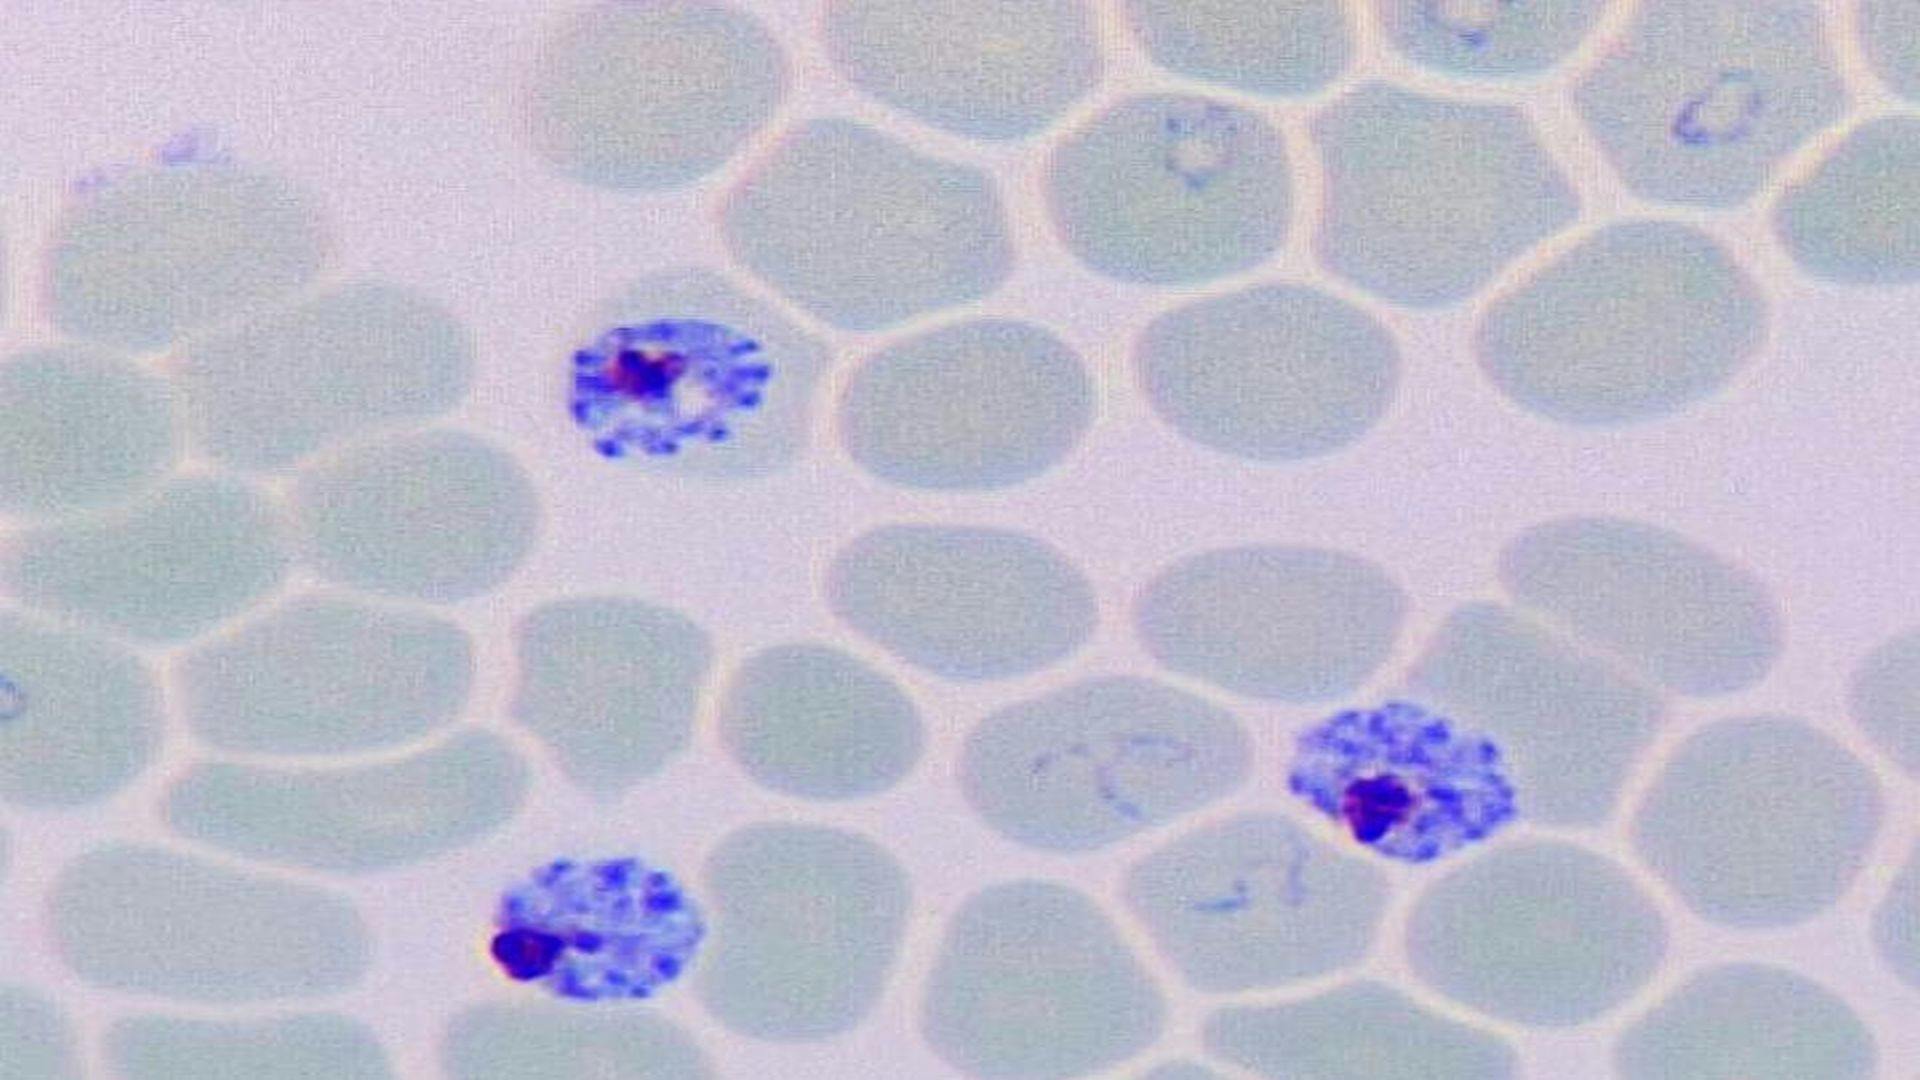 MMV Malaria Box is Phenotyped Against Plasmodium and Toxoplasma